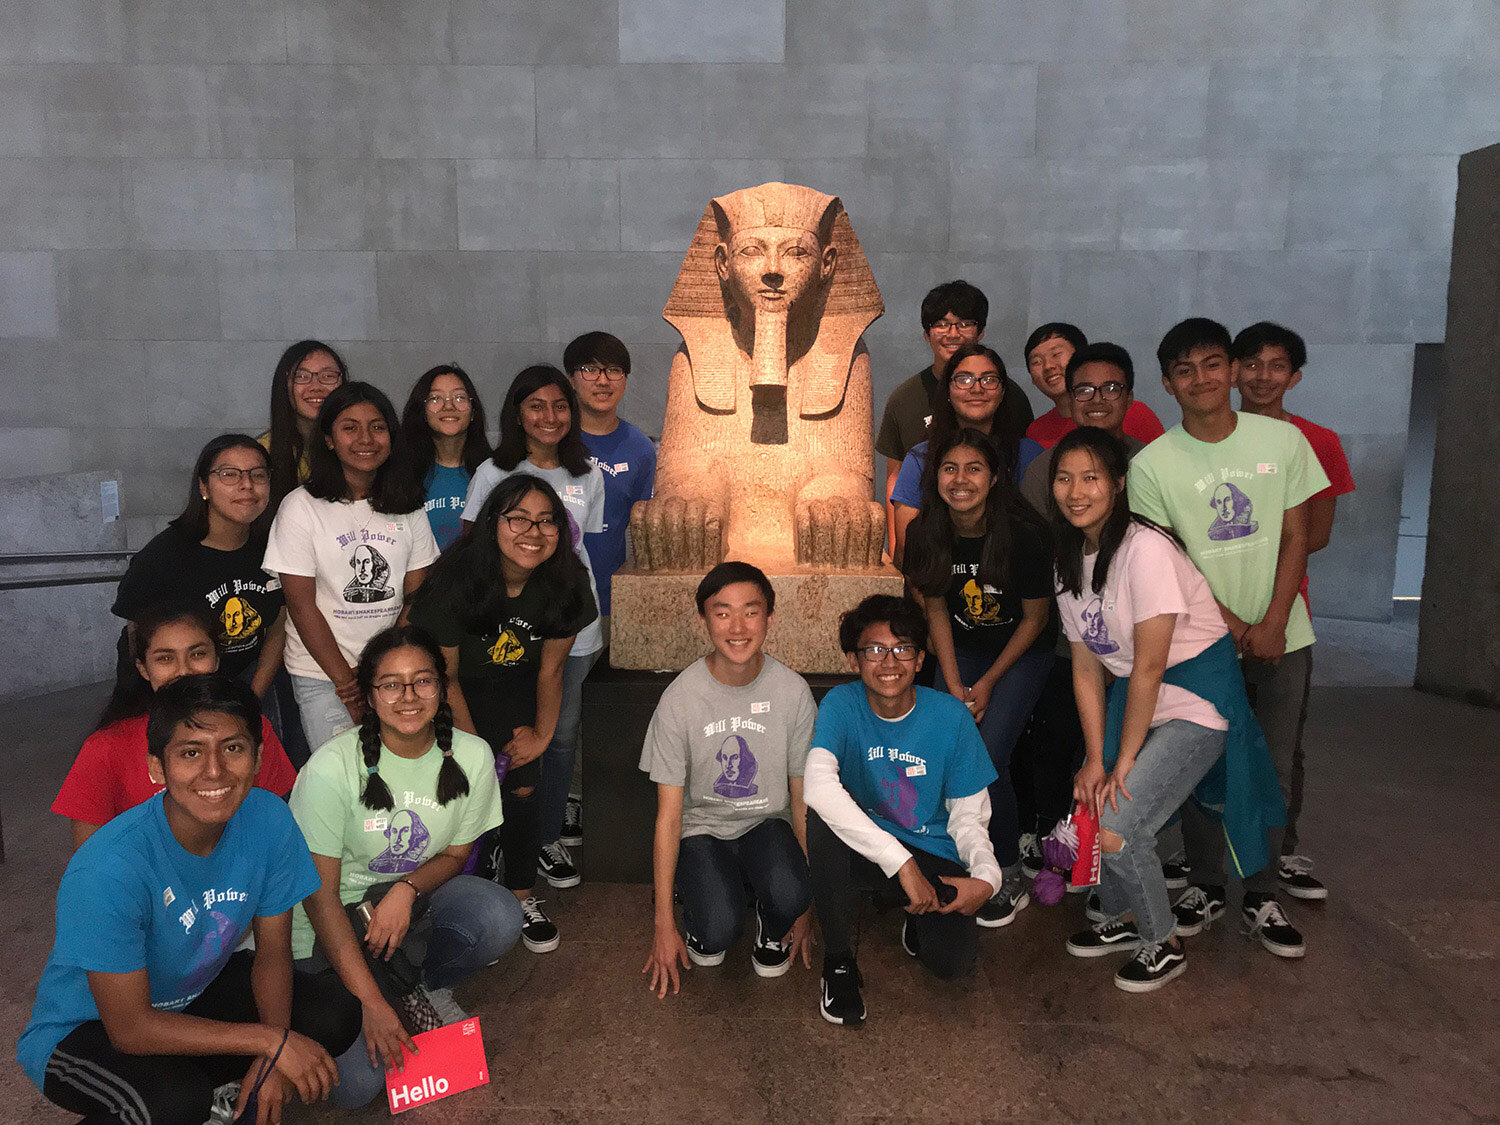  The Sphinx at The Metropolitan Museum of Art, New York City 